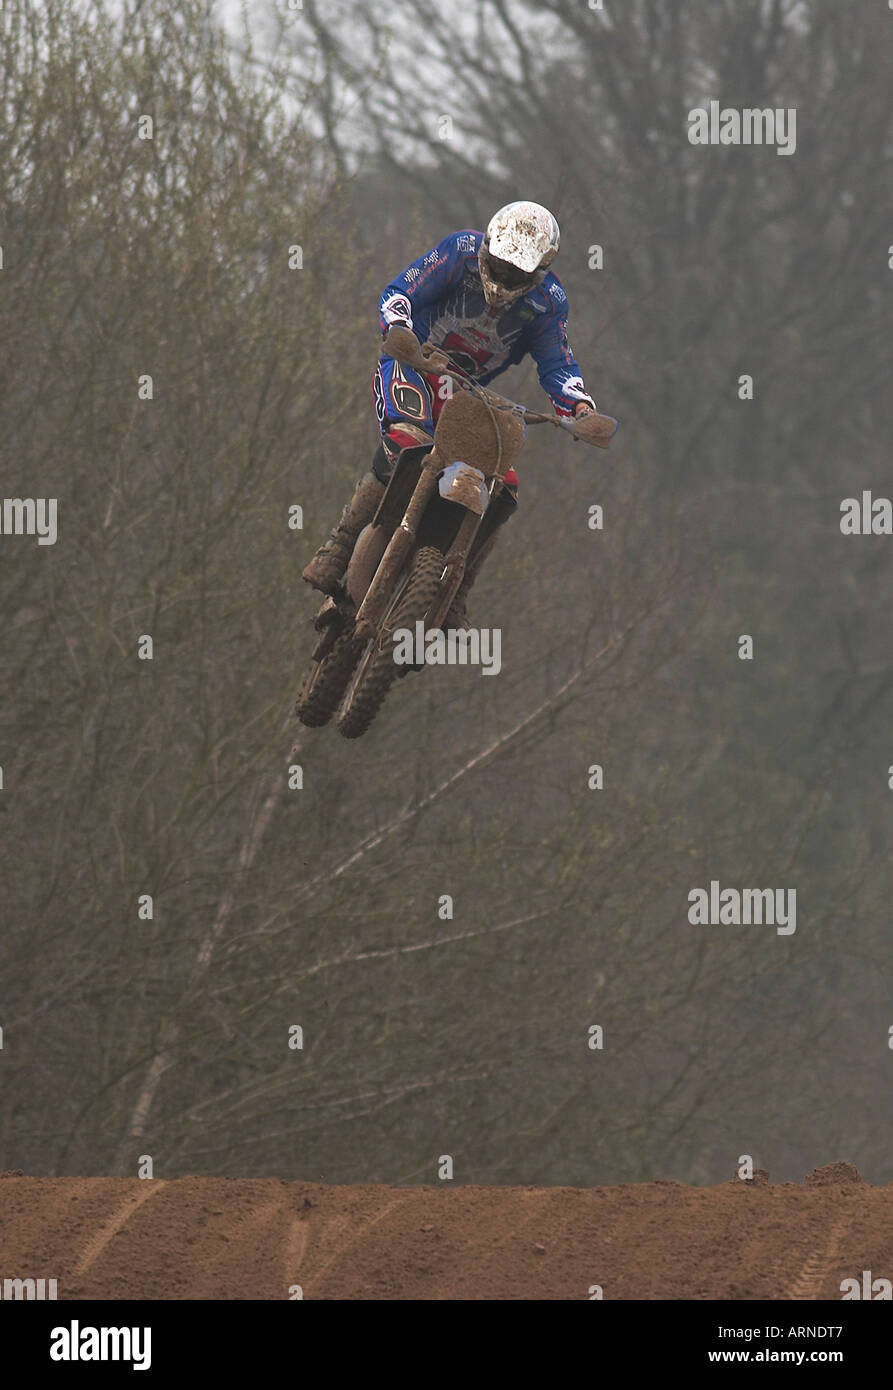 Jumping motocross driver Stock Photo - Alamy